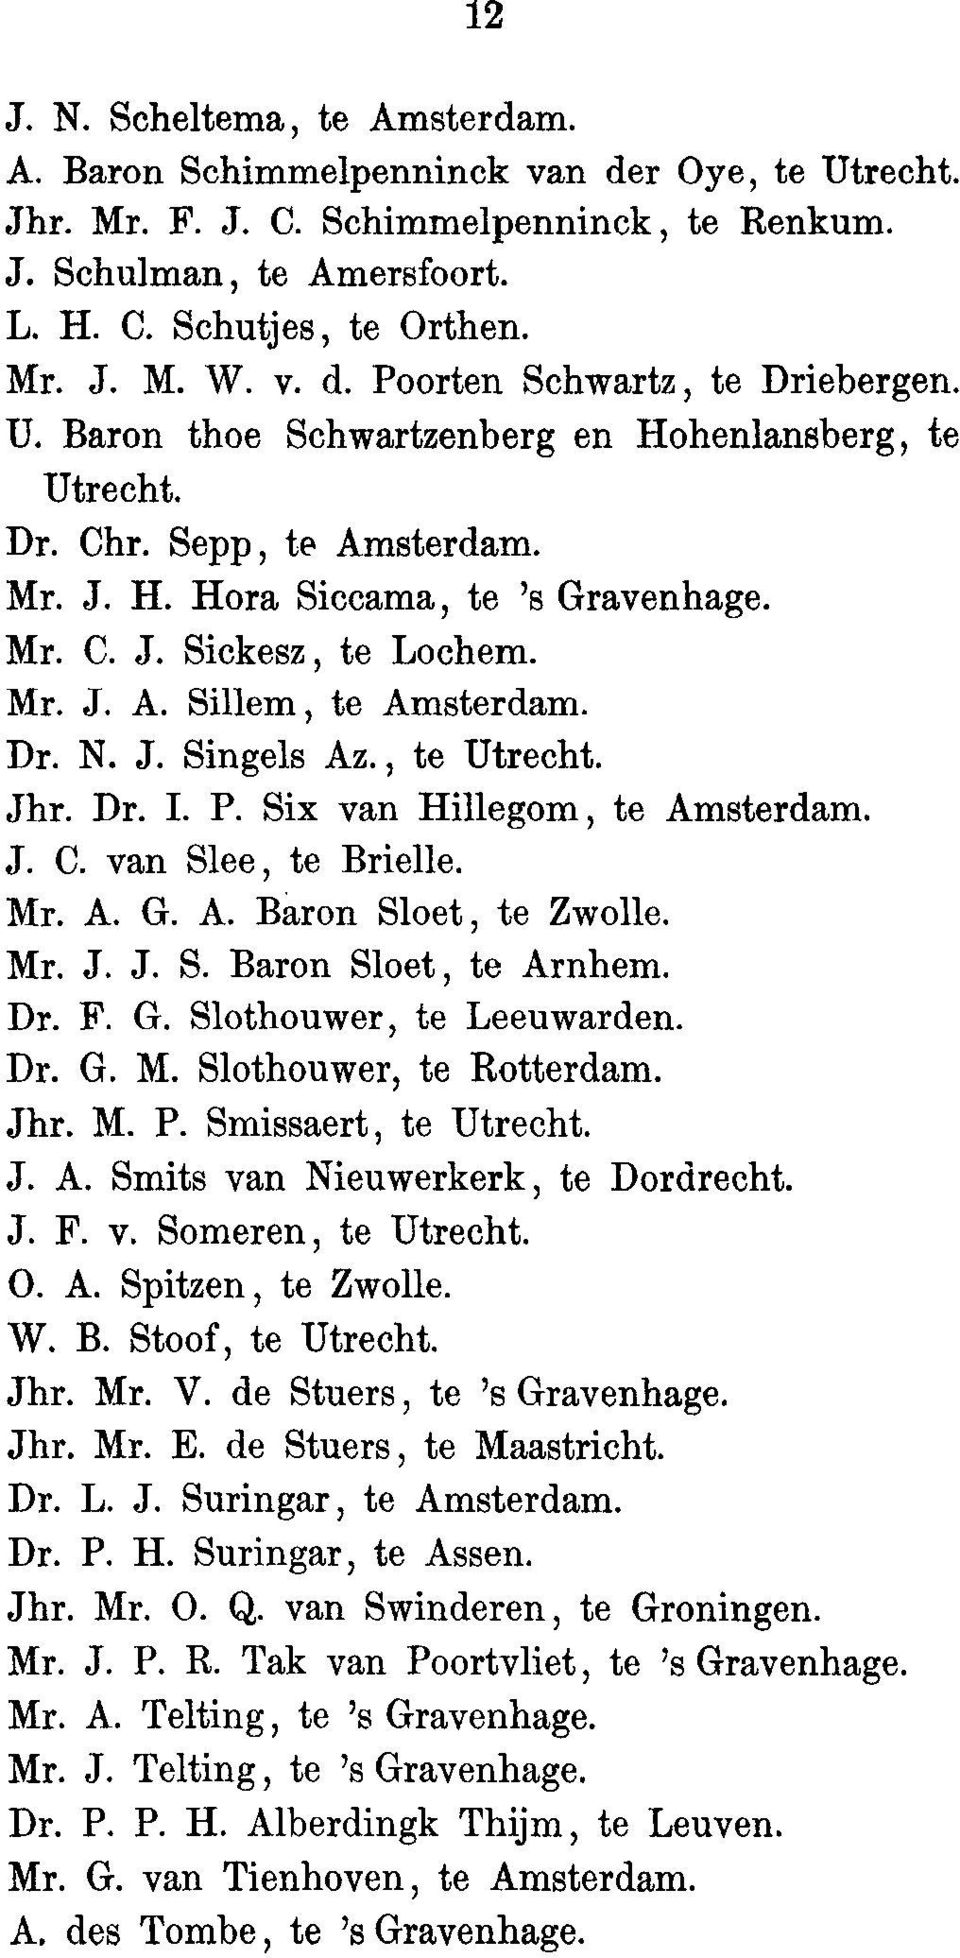 Mr. J. A. Sillem, to Amsterdam. Dr. N. J. Singels Az., to Utrecht. Jhr. Dr. I. P. Six van Hillegom, to Amsterdam. J. C. van Slee, to Brielle. Mr. A. G. A. Baron Sloet, to Zwolle. Mr. J. J. S. Baron Sloet, to Arnhem.